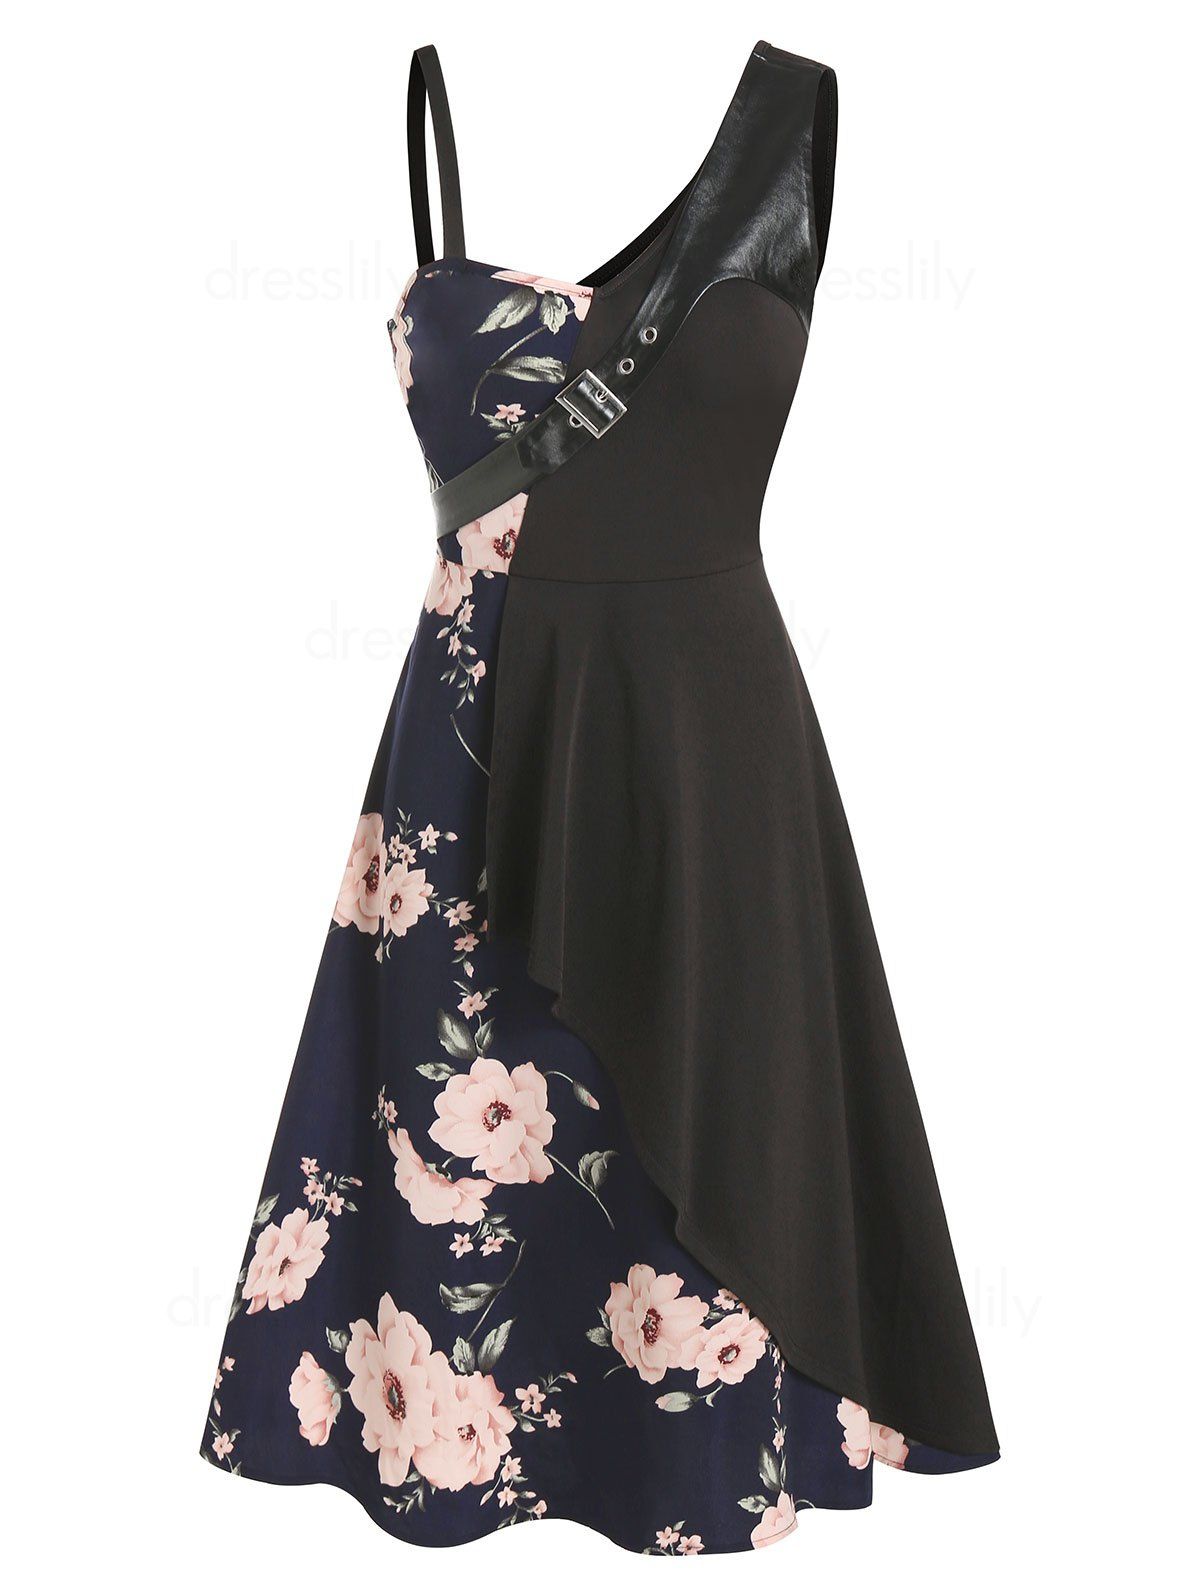 Floral Print Buckled Sleeveless Asymmetrical A Line Dress - CADETBLUE XL